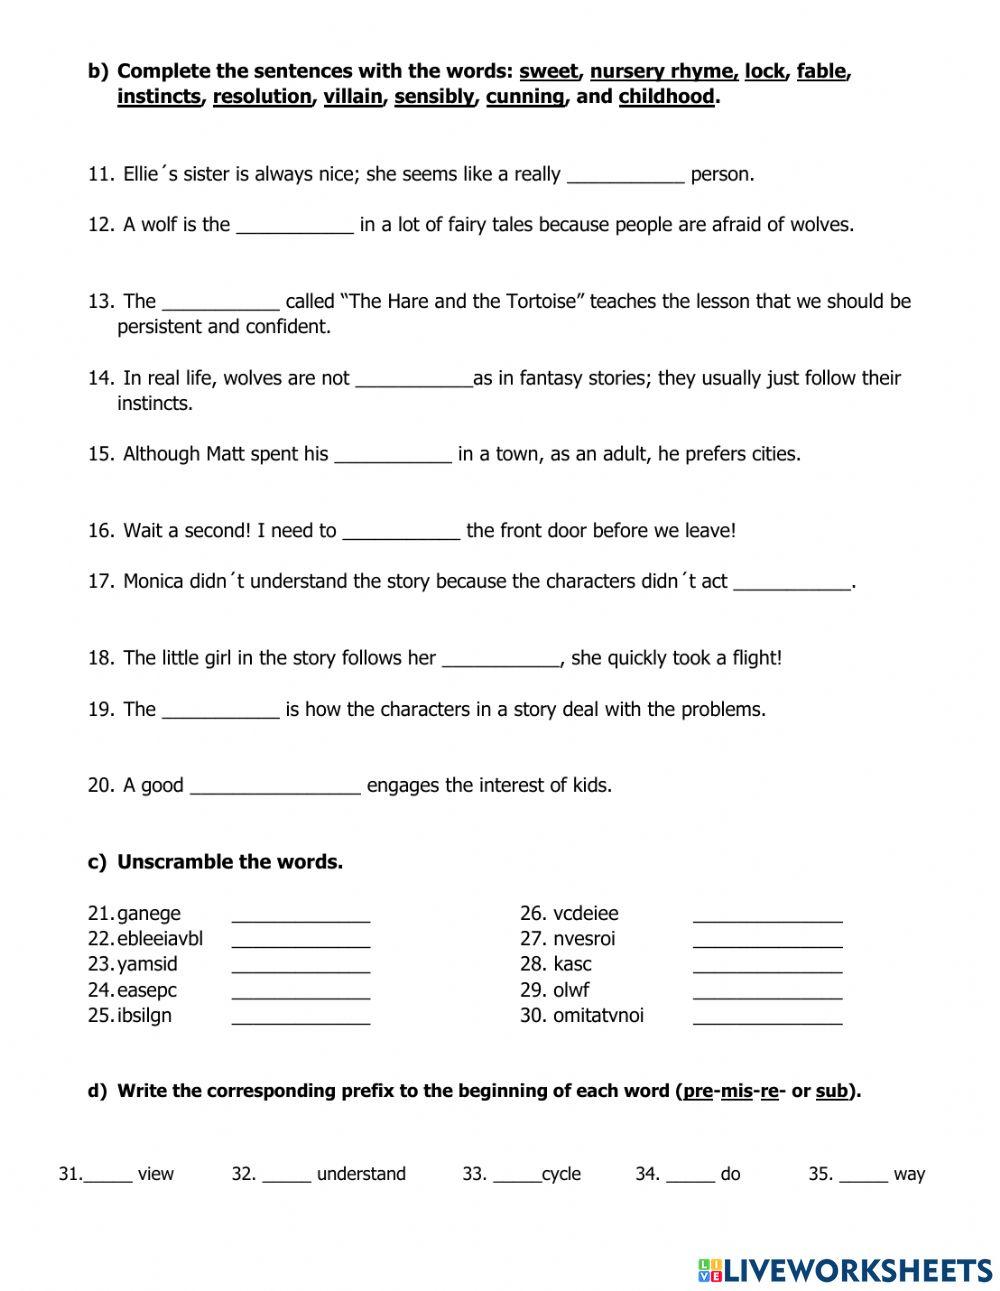 Unit 6 Vocabulary and Spelling Exam